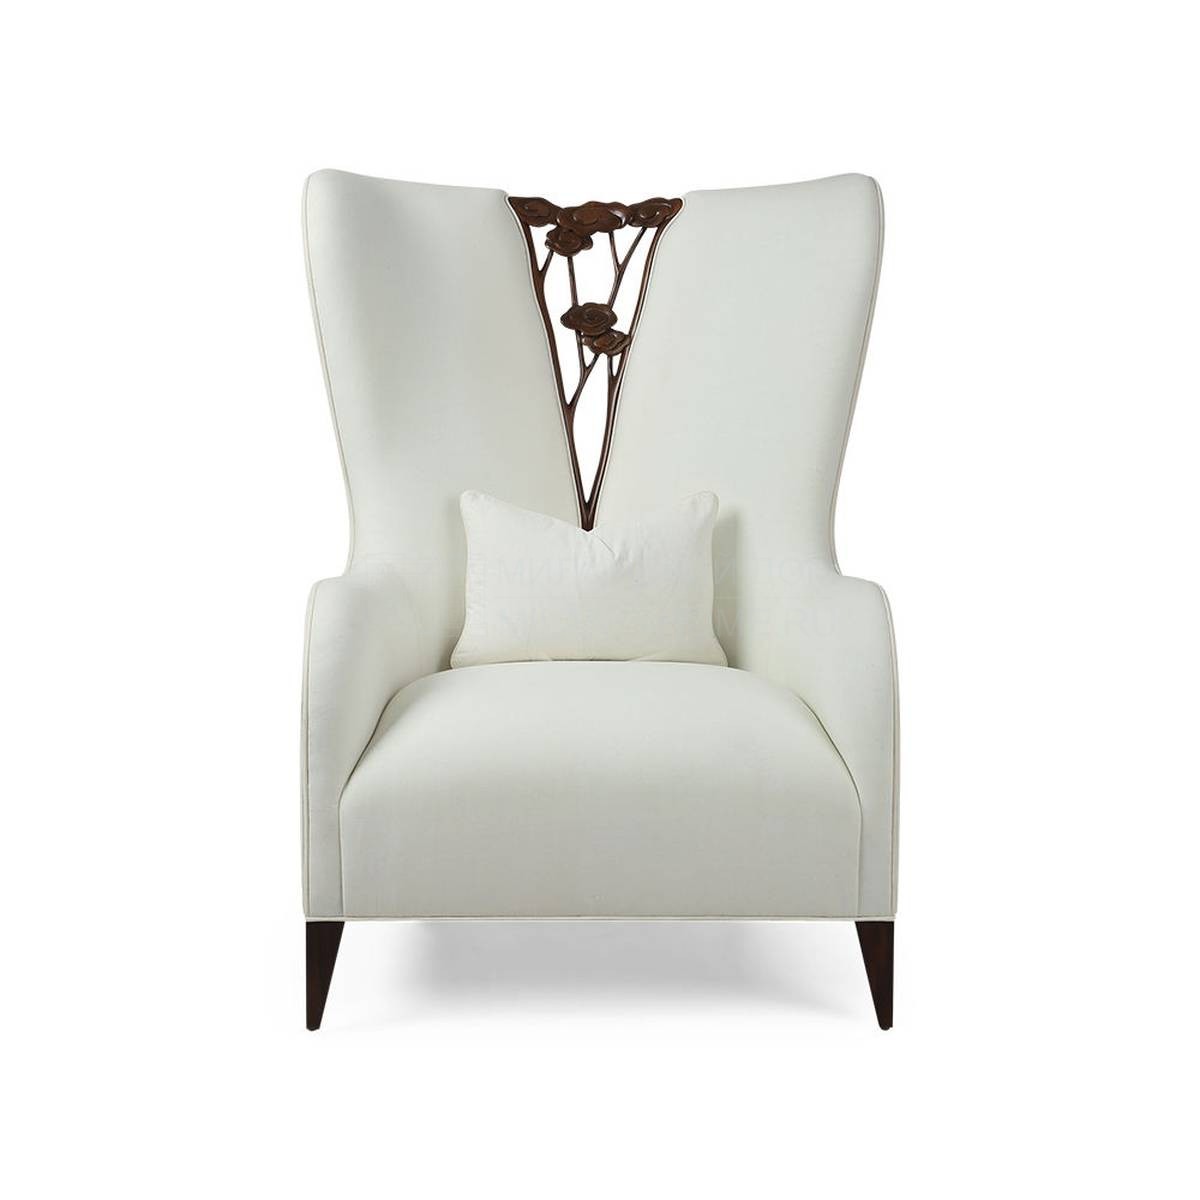 Кожаное кресло Camellias armchair из США фабрики CHRISTOPHER GUY